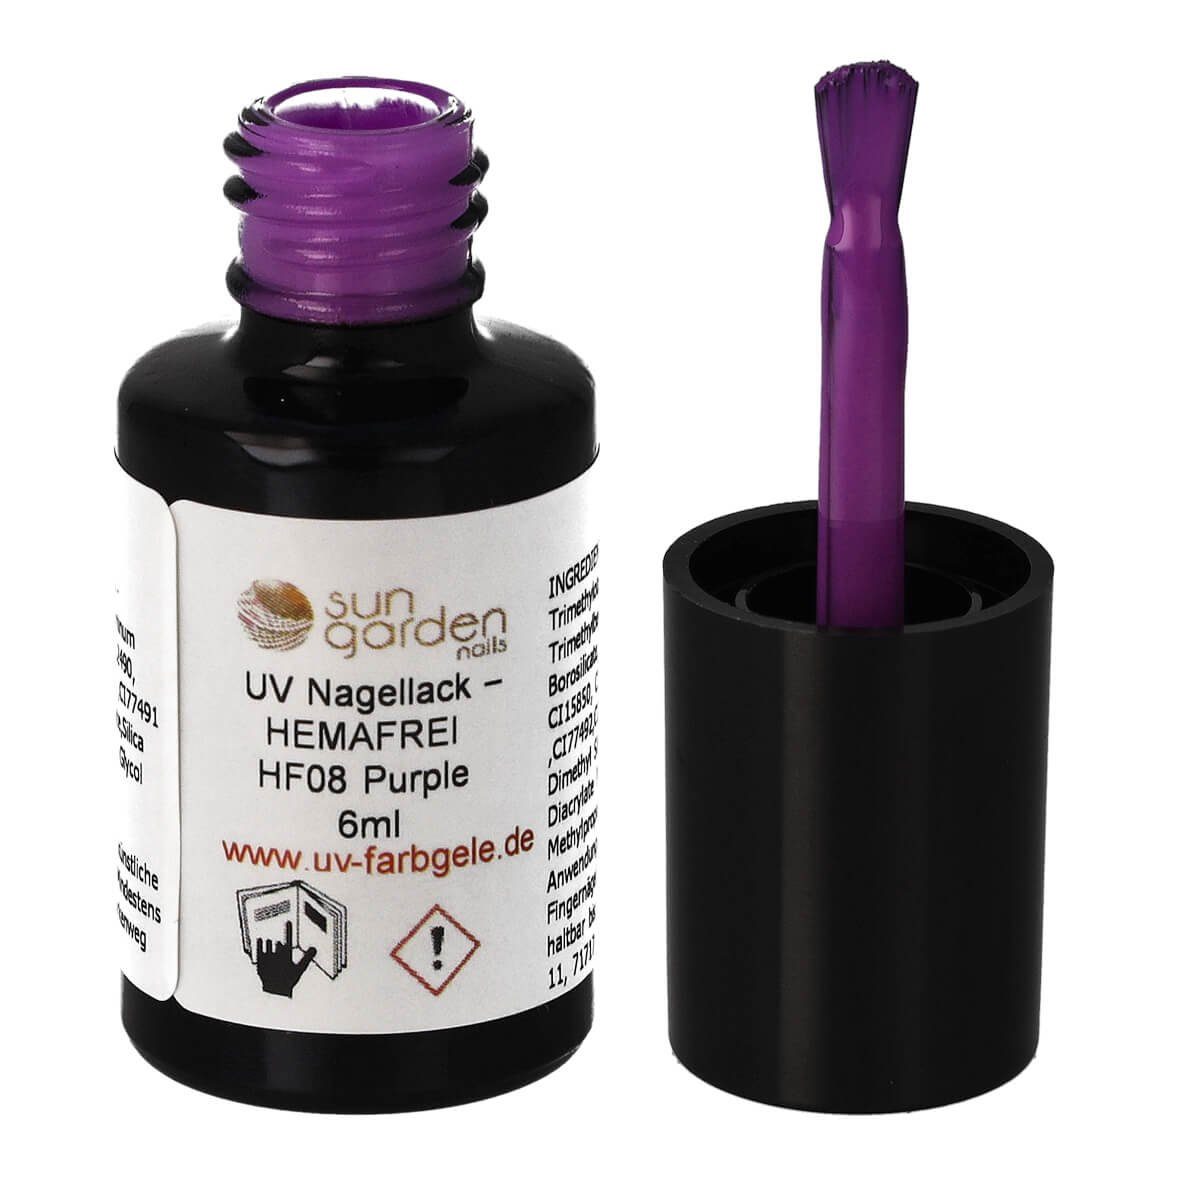 Sun Garden Nails – UV - Purple Nagellack 6ml HF08 Nagellack HEMAFREI